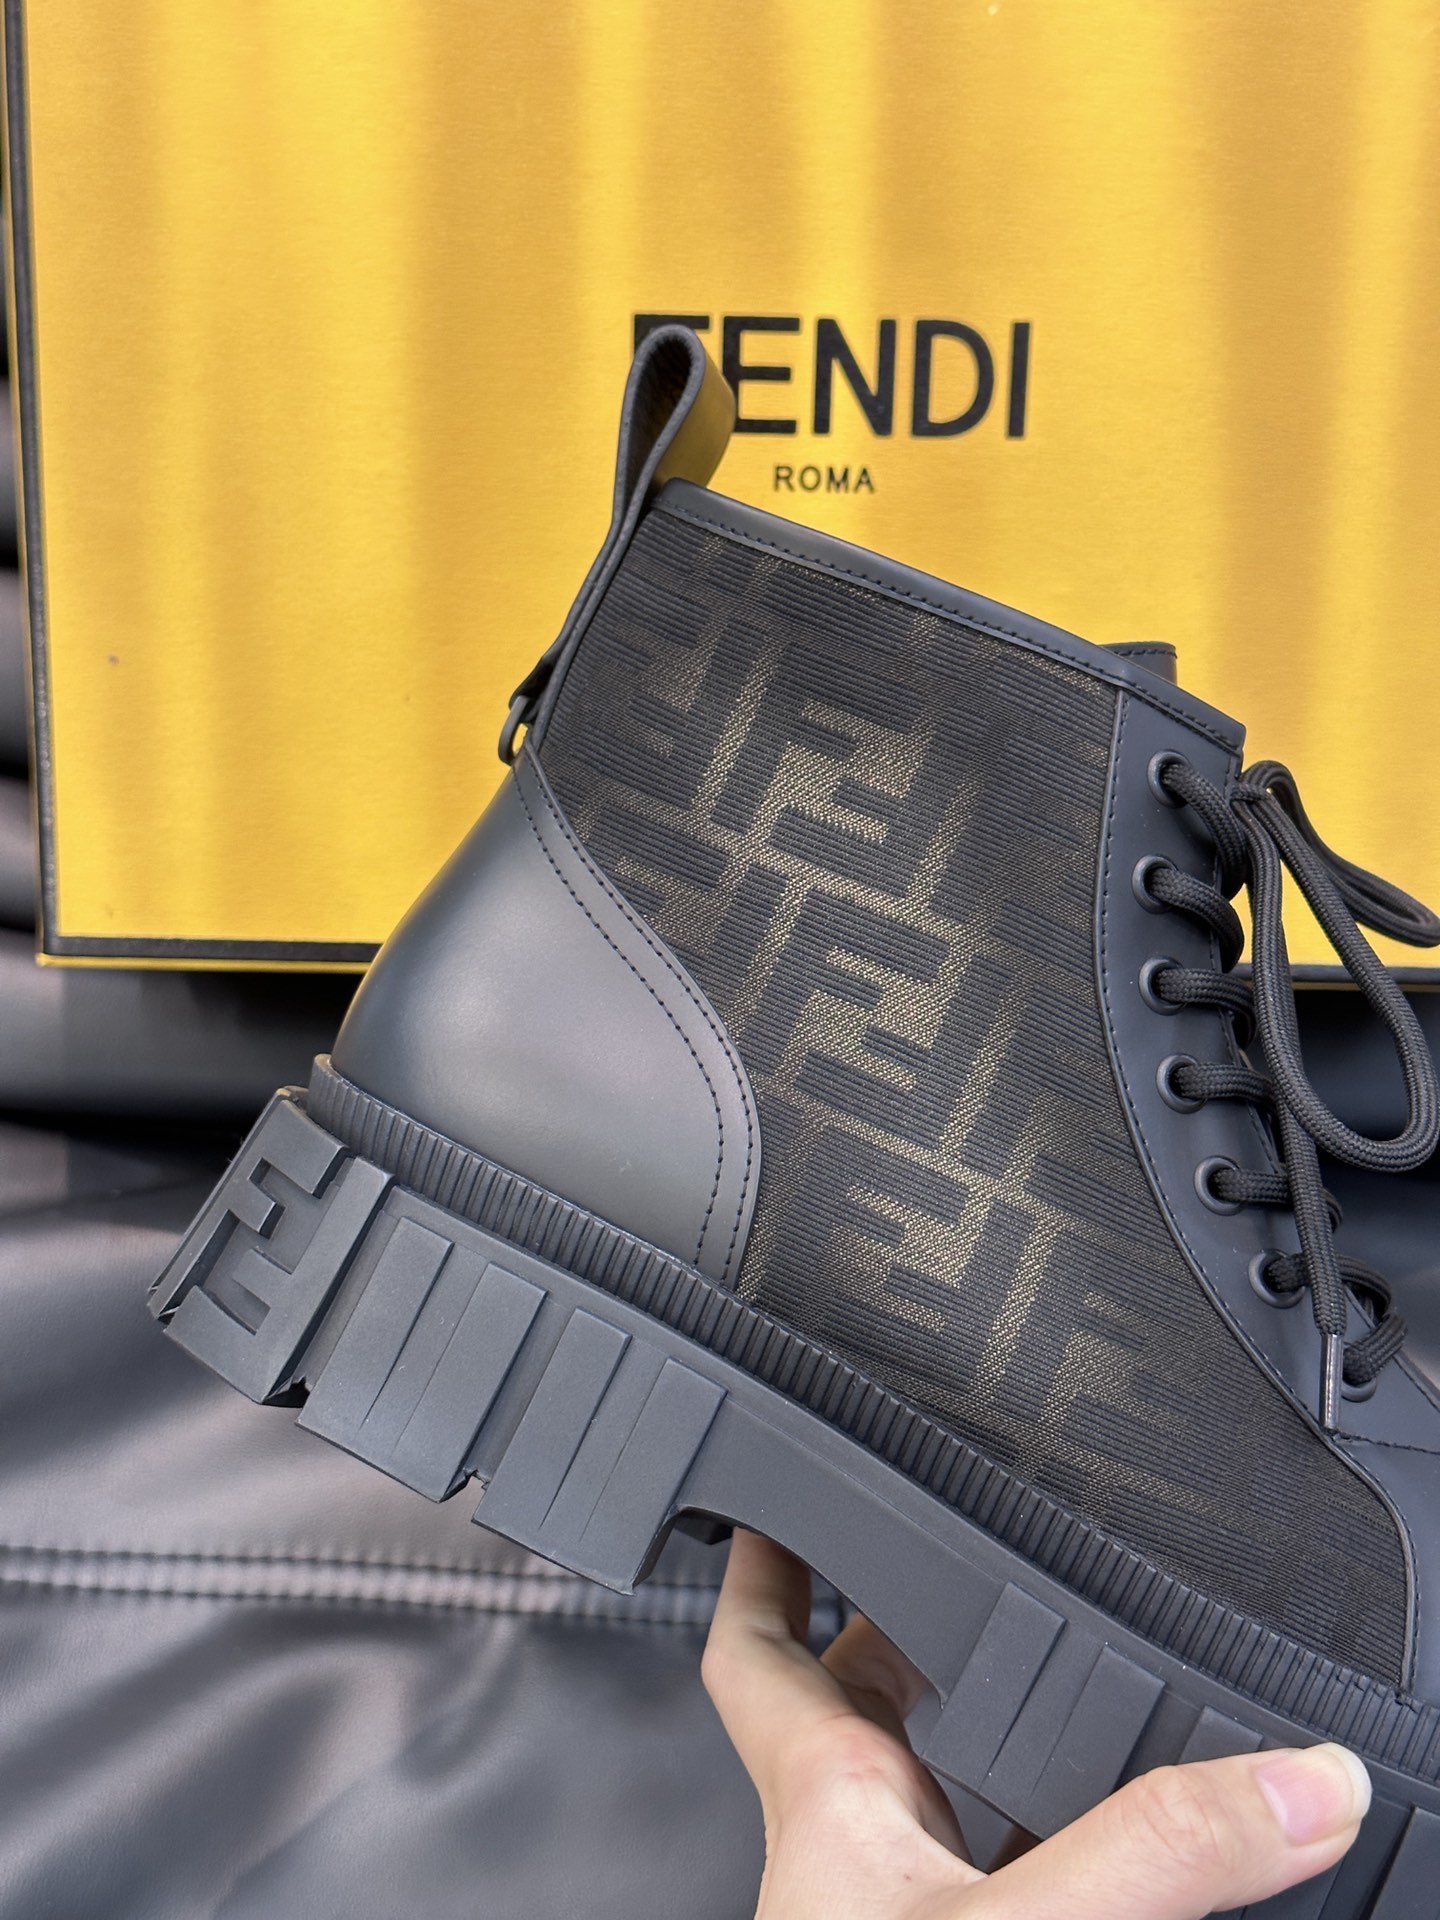 ️️FENDIForce机车靴FENDIForce机车靴来自StefanoPilati设计系列采用黑色皮